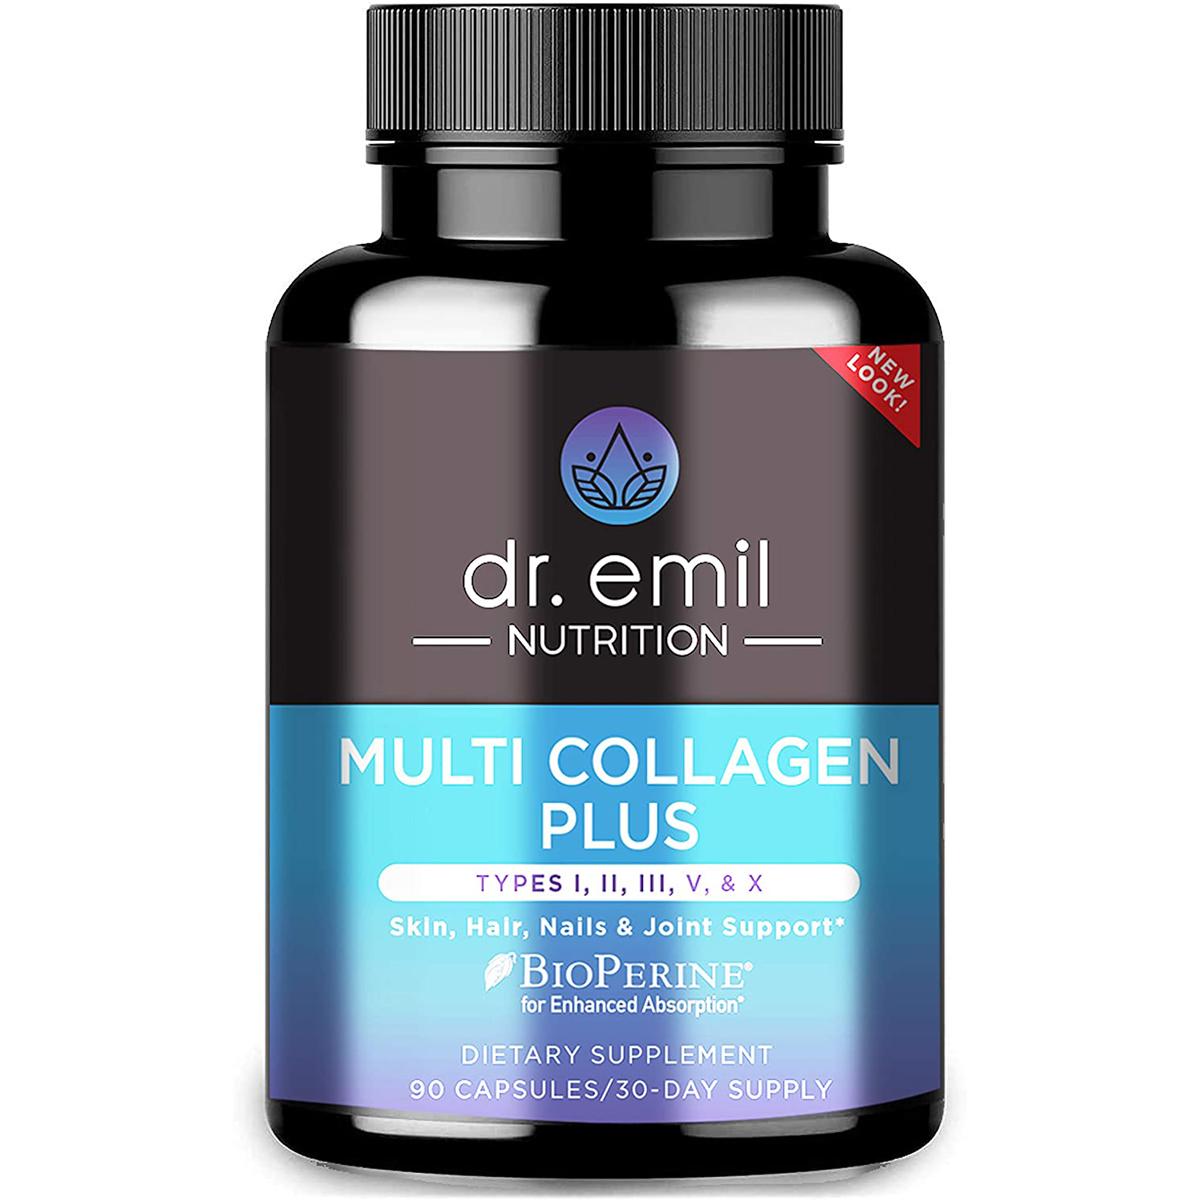 Dr Emil Nutrition Multi Collagen Plus Pills for $12.47 Shipped